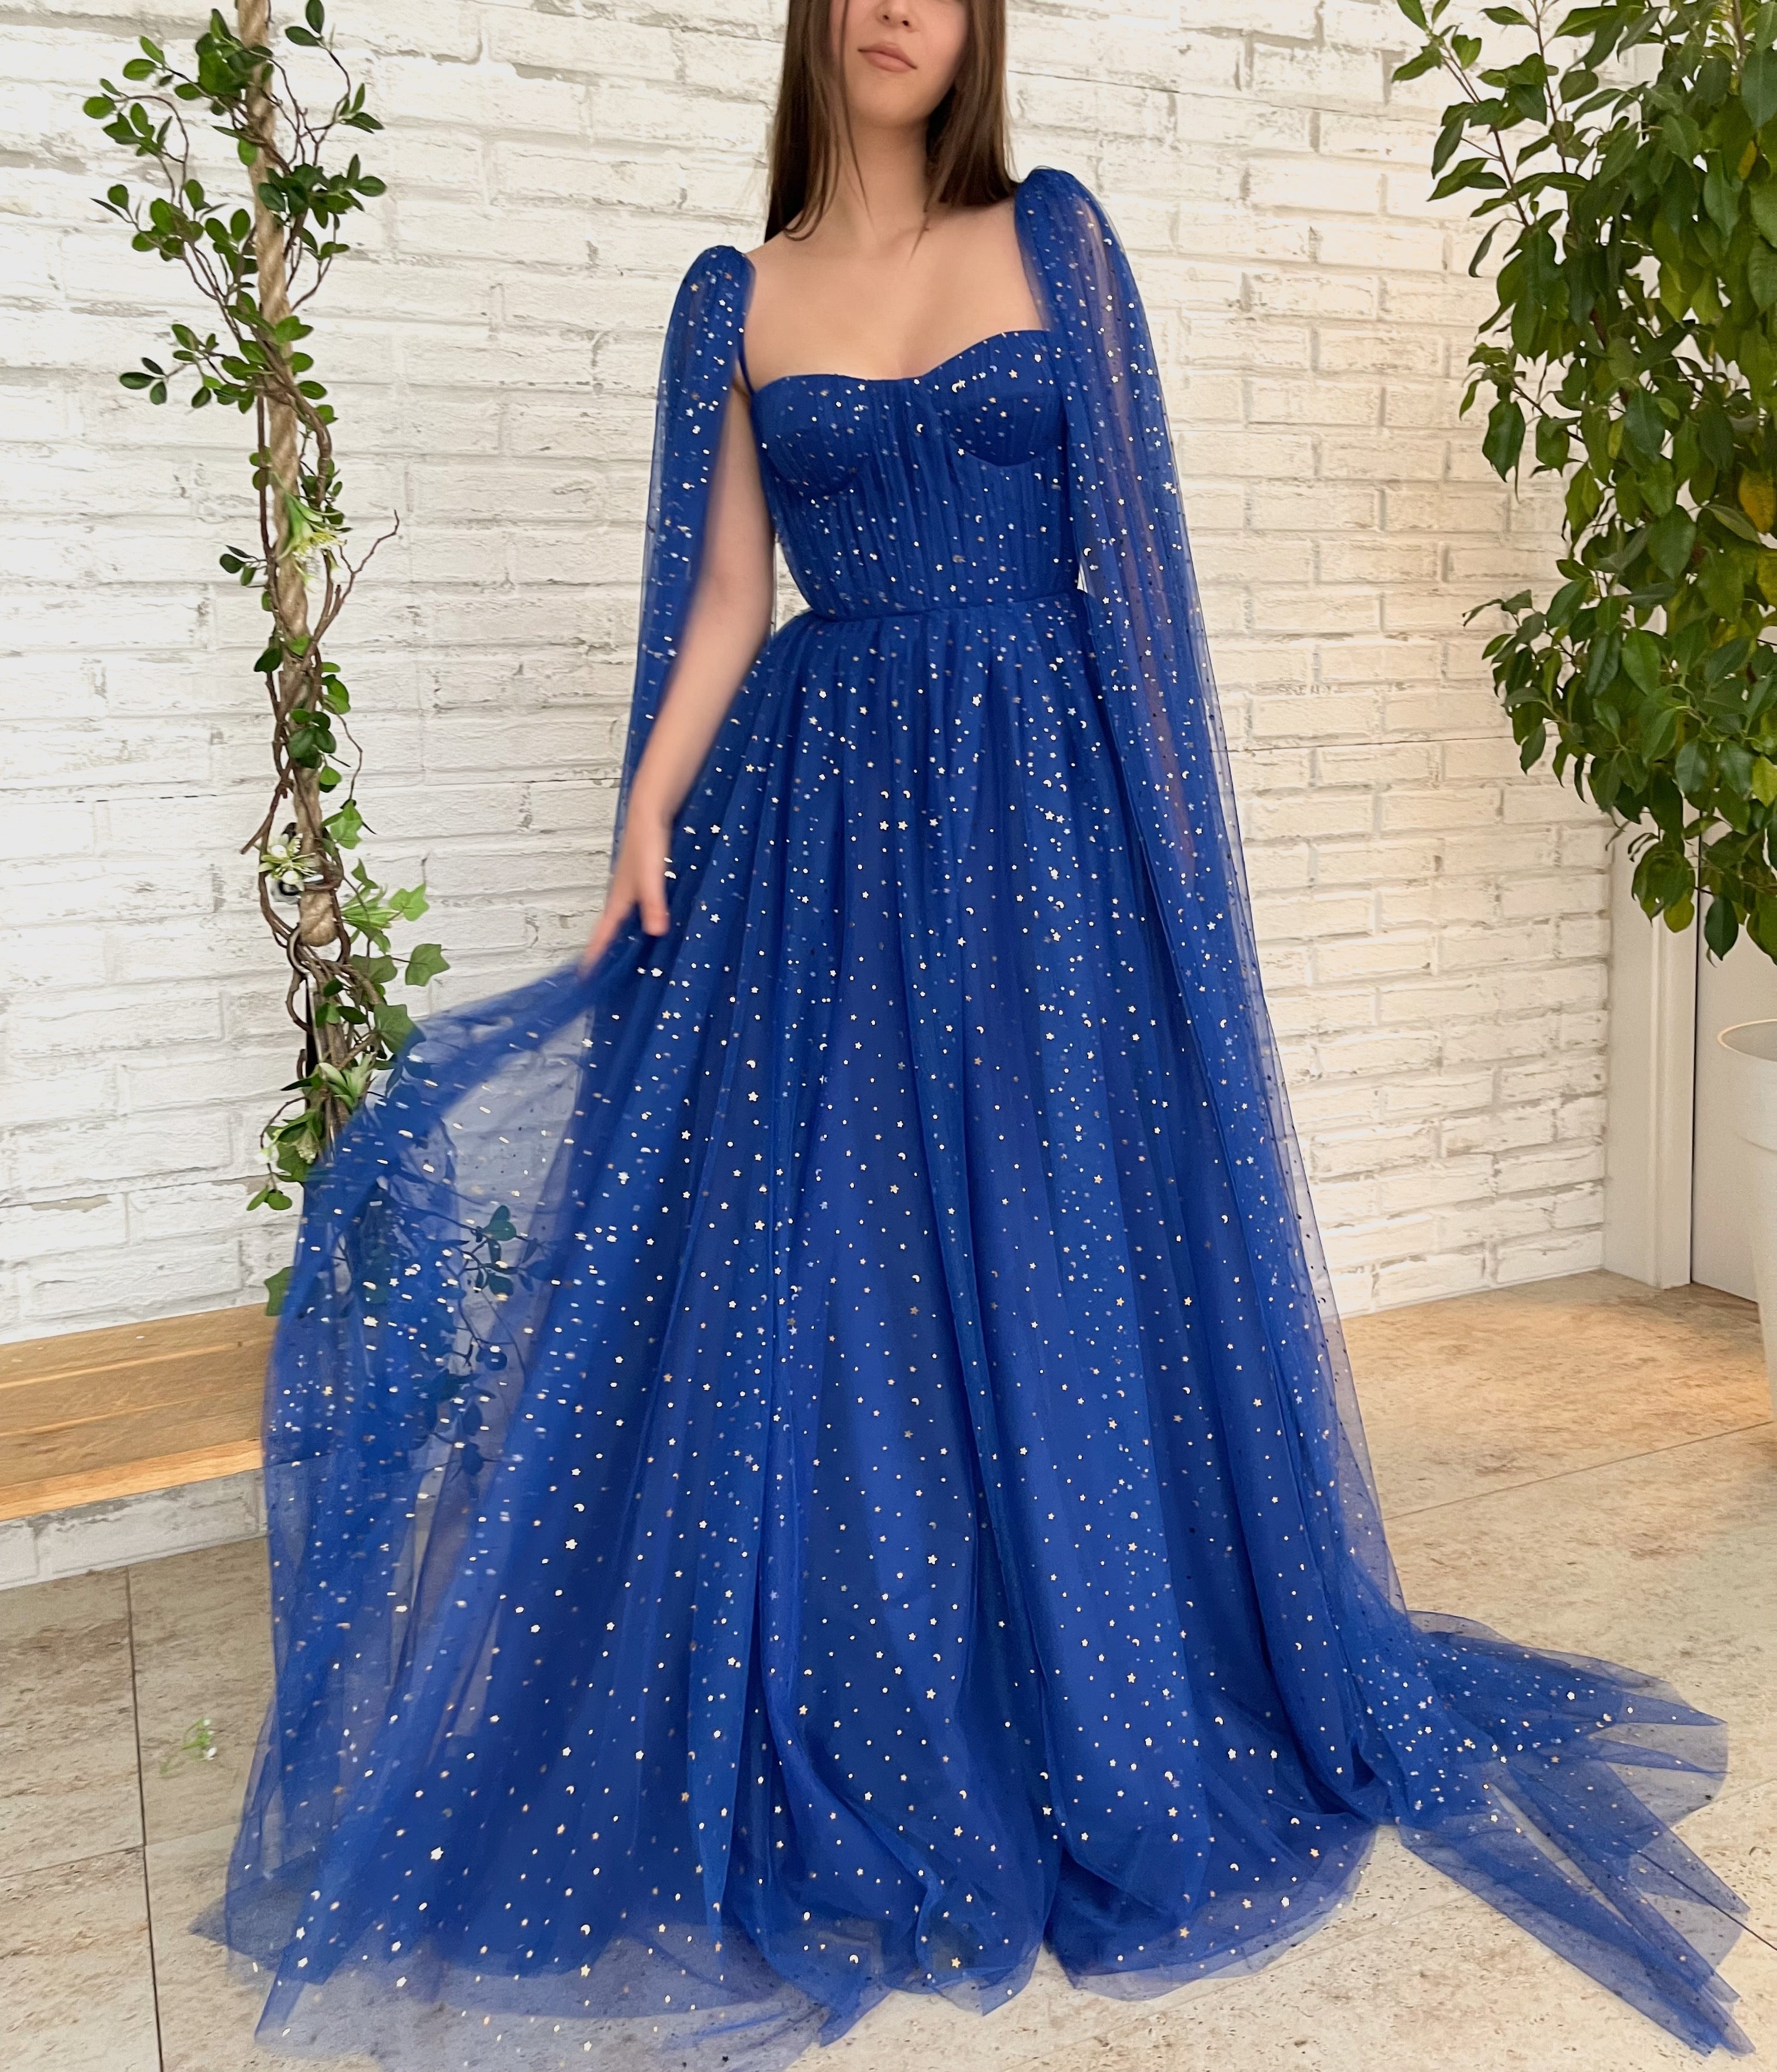 dress with stars